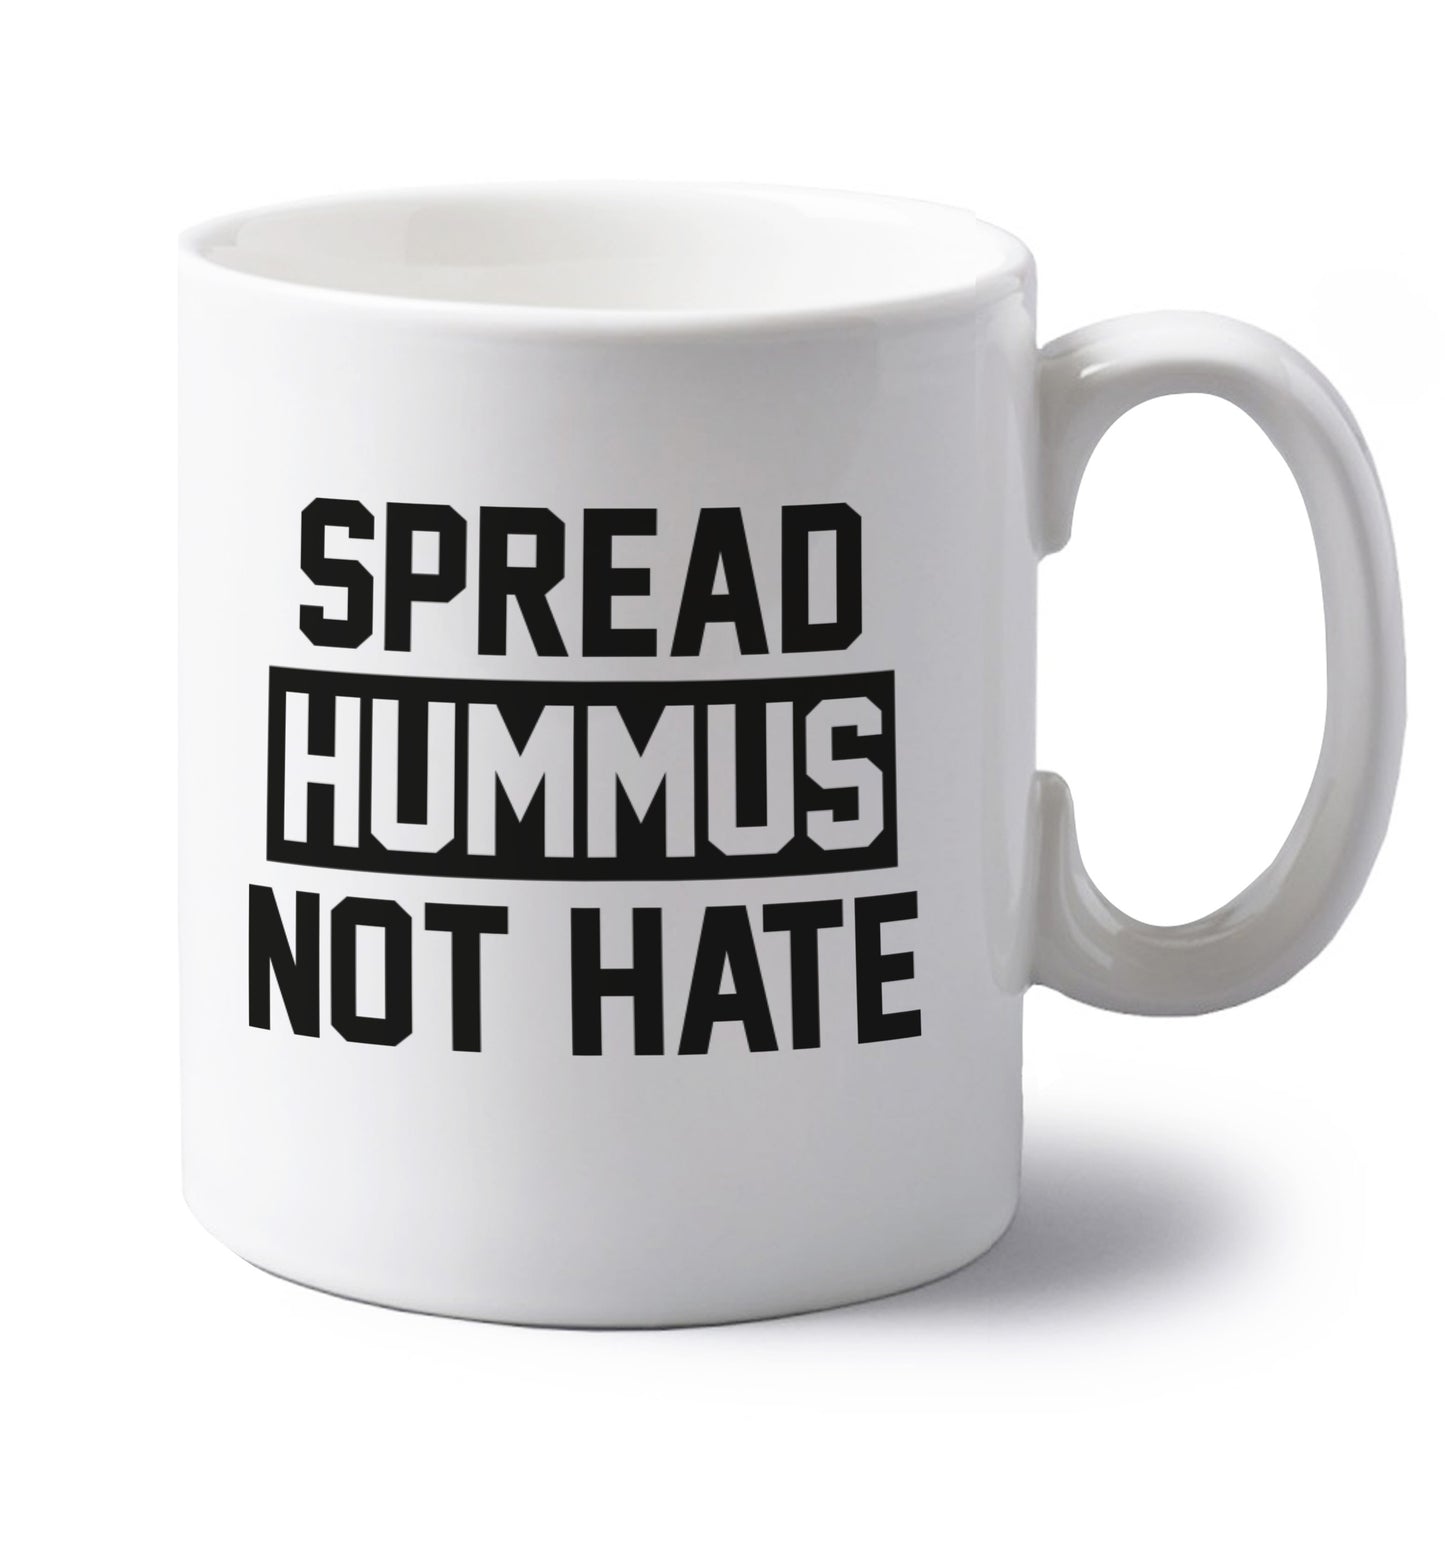 Spread hummus not hate left handed white ceramic mug 